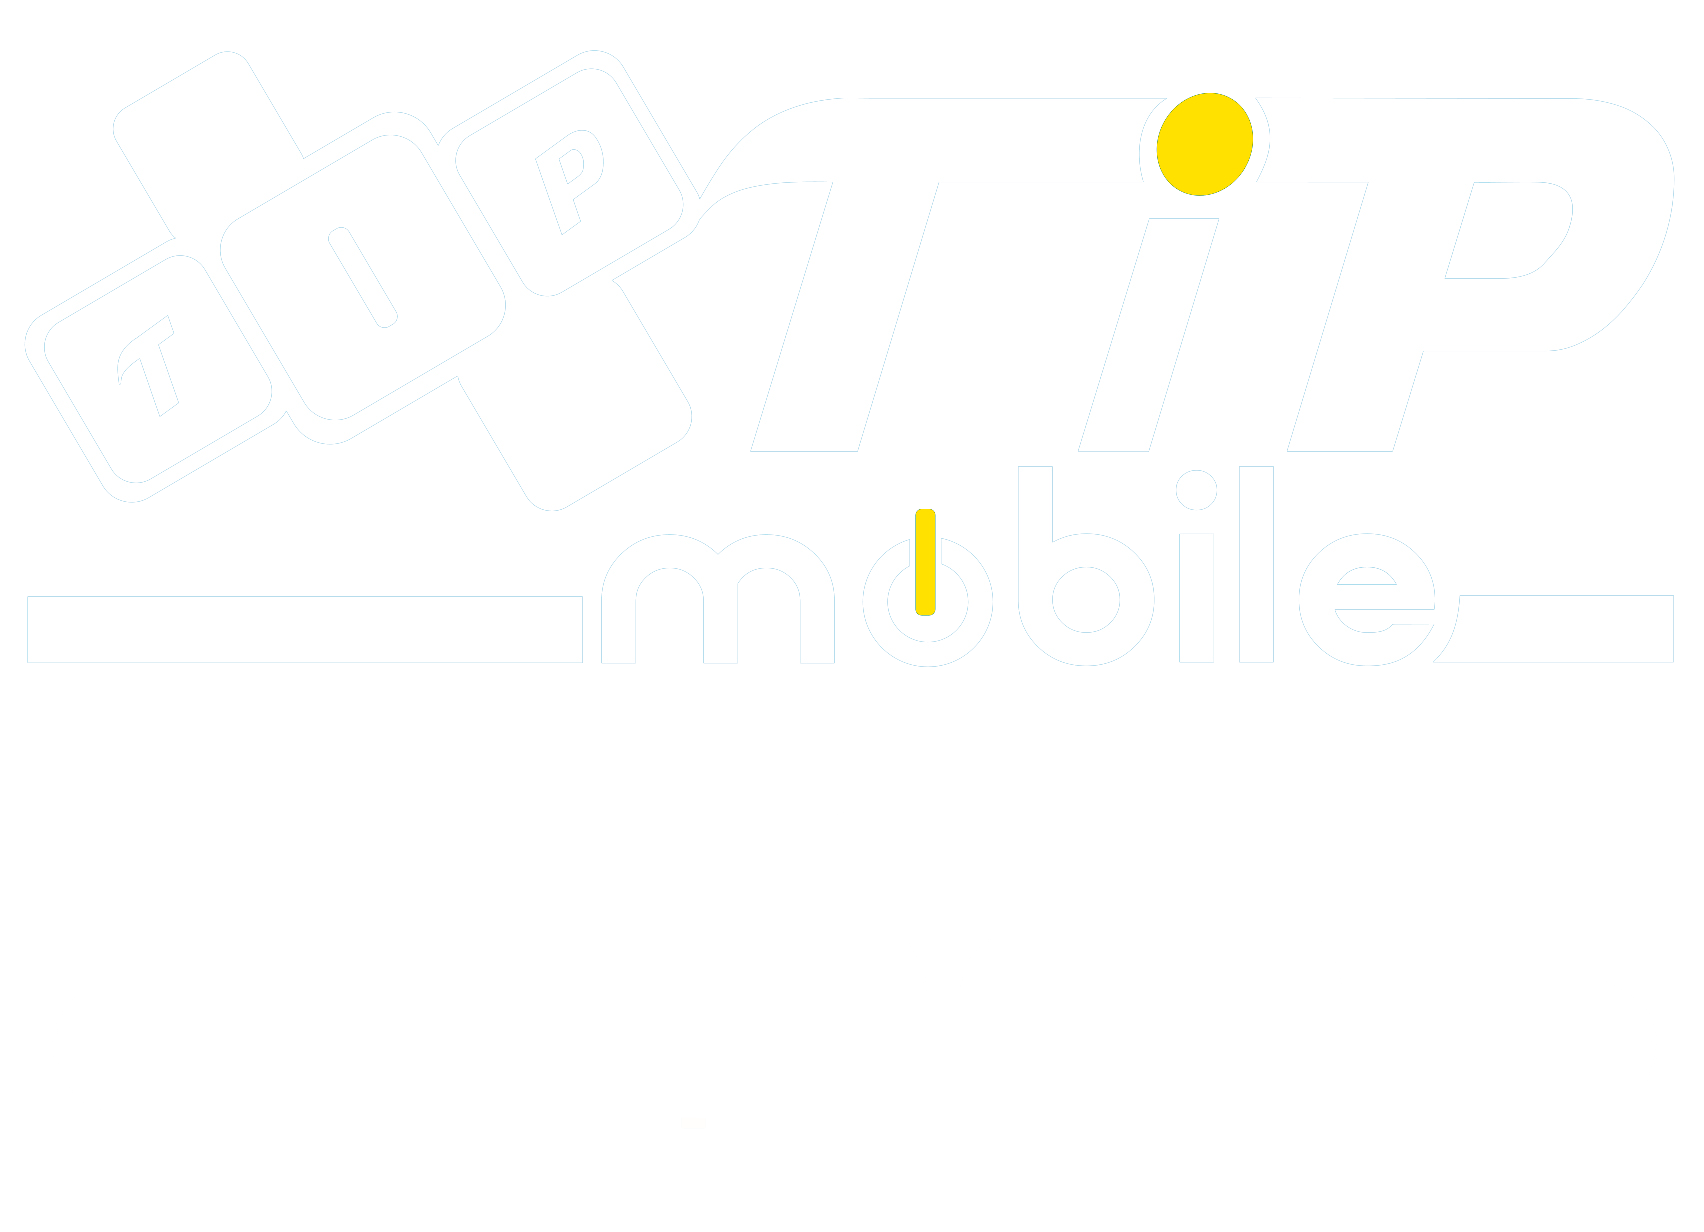 Tip Mobile